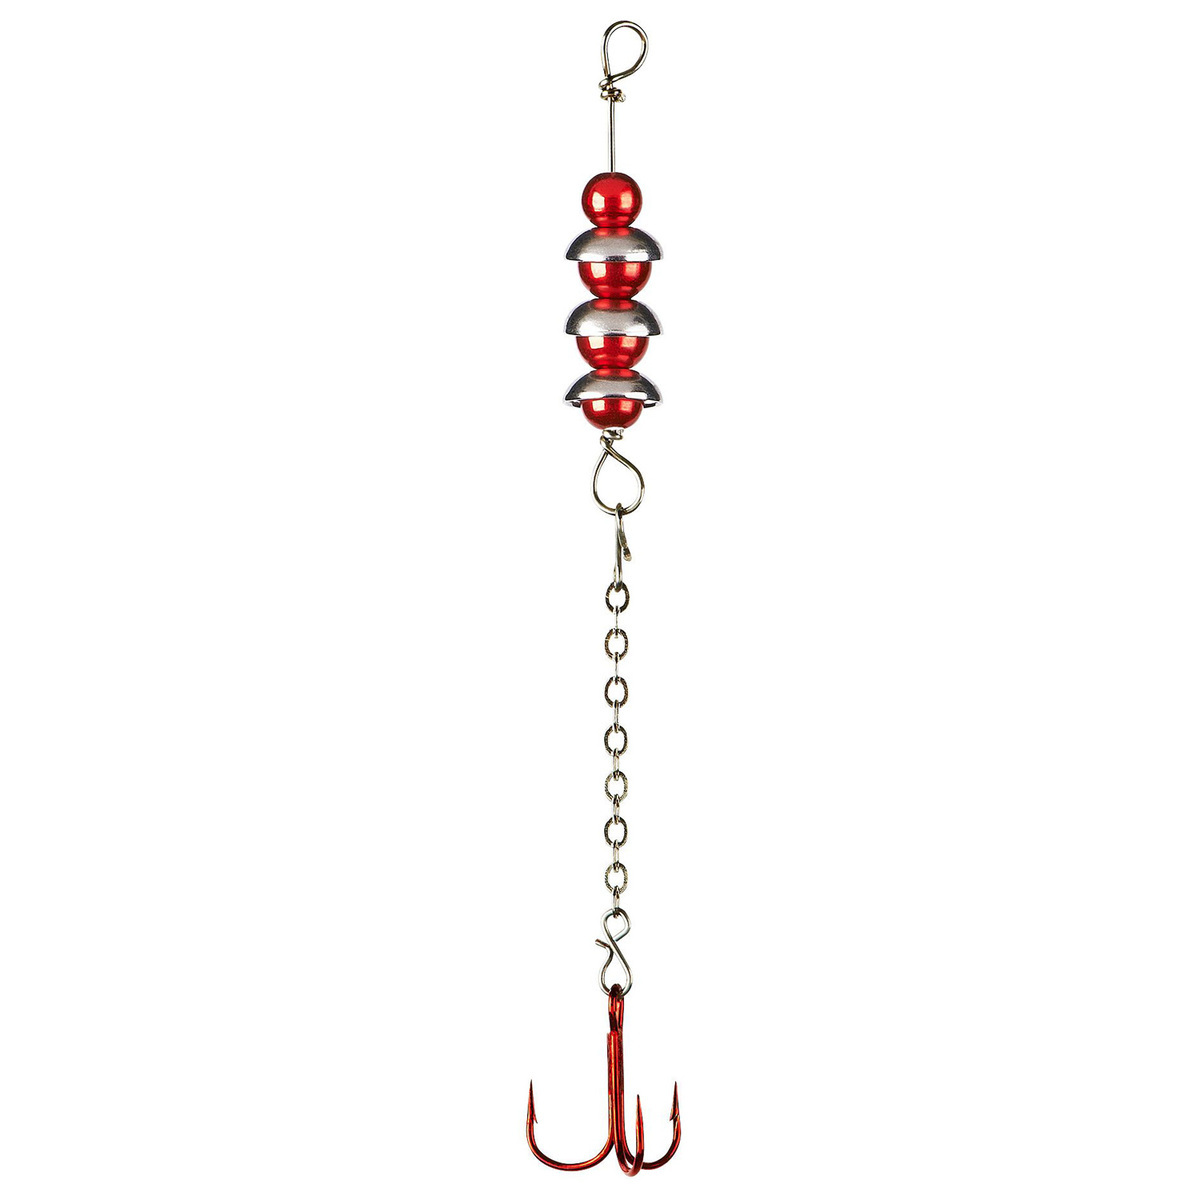 Lindy Perch Talker Ice FIshing Chain Dropper Hook - Metallic Red